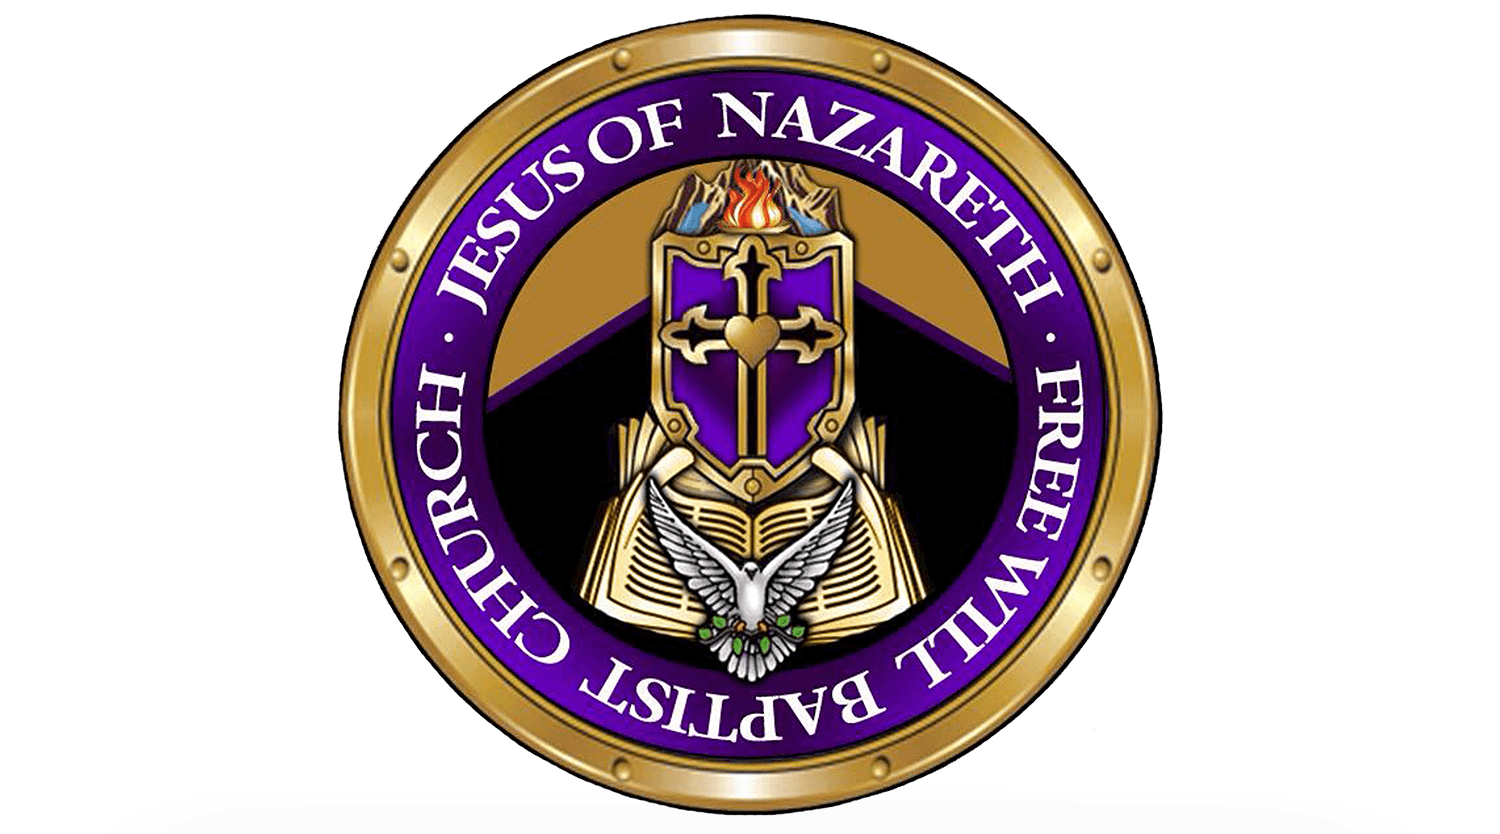 Jesus of Nazareth Free Will Baptist Church